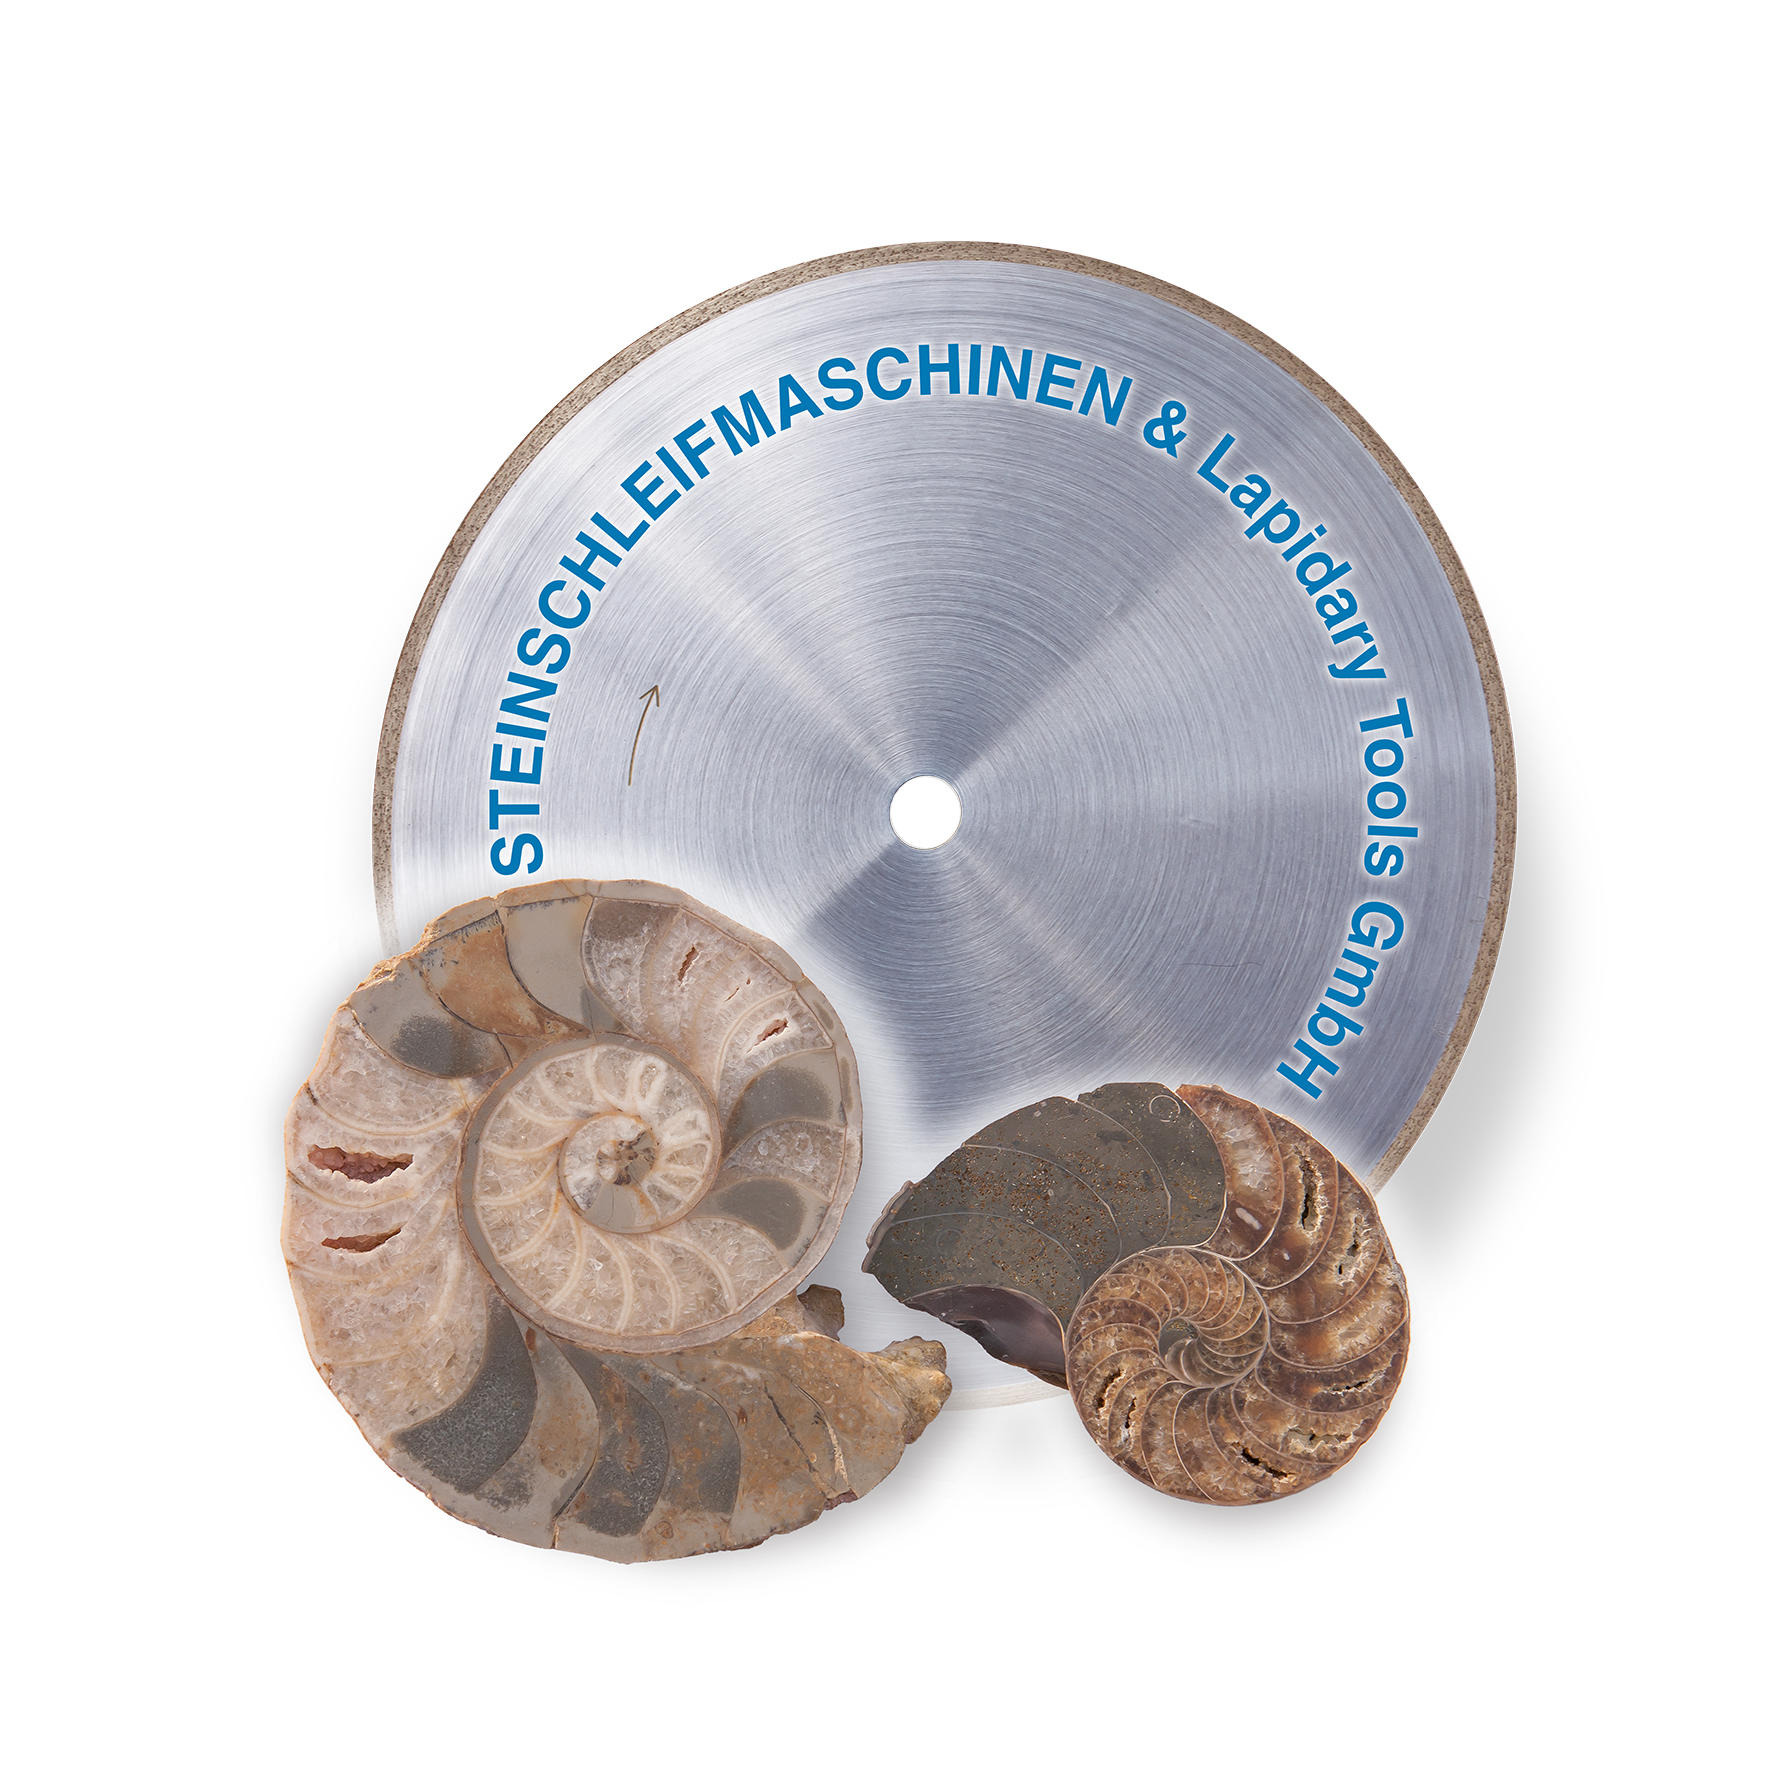 Steinschleifmaschinen & Lapidary Tools GmbH Logo